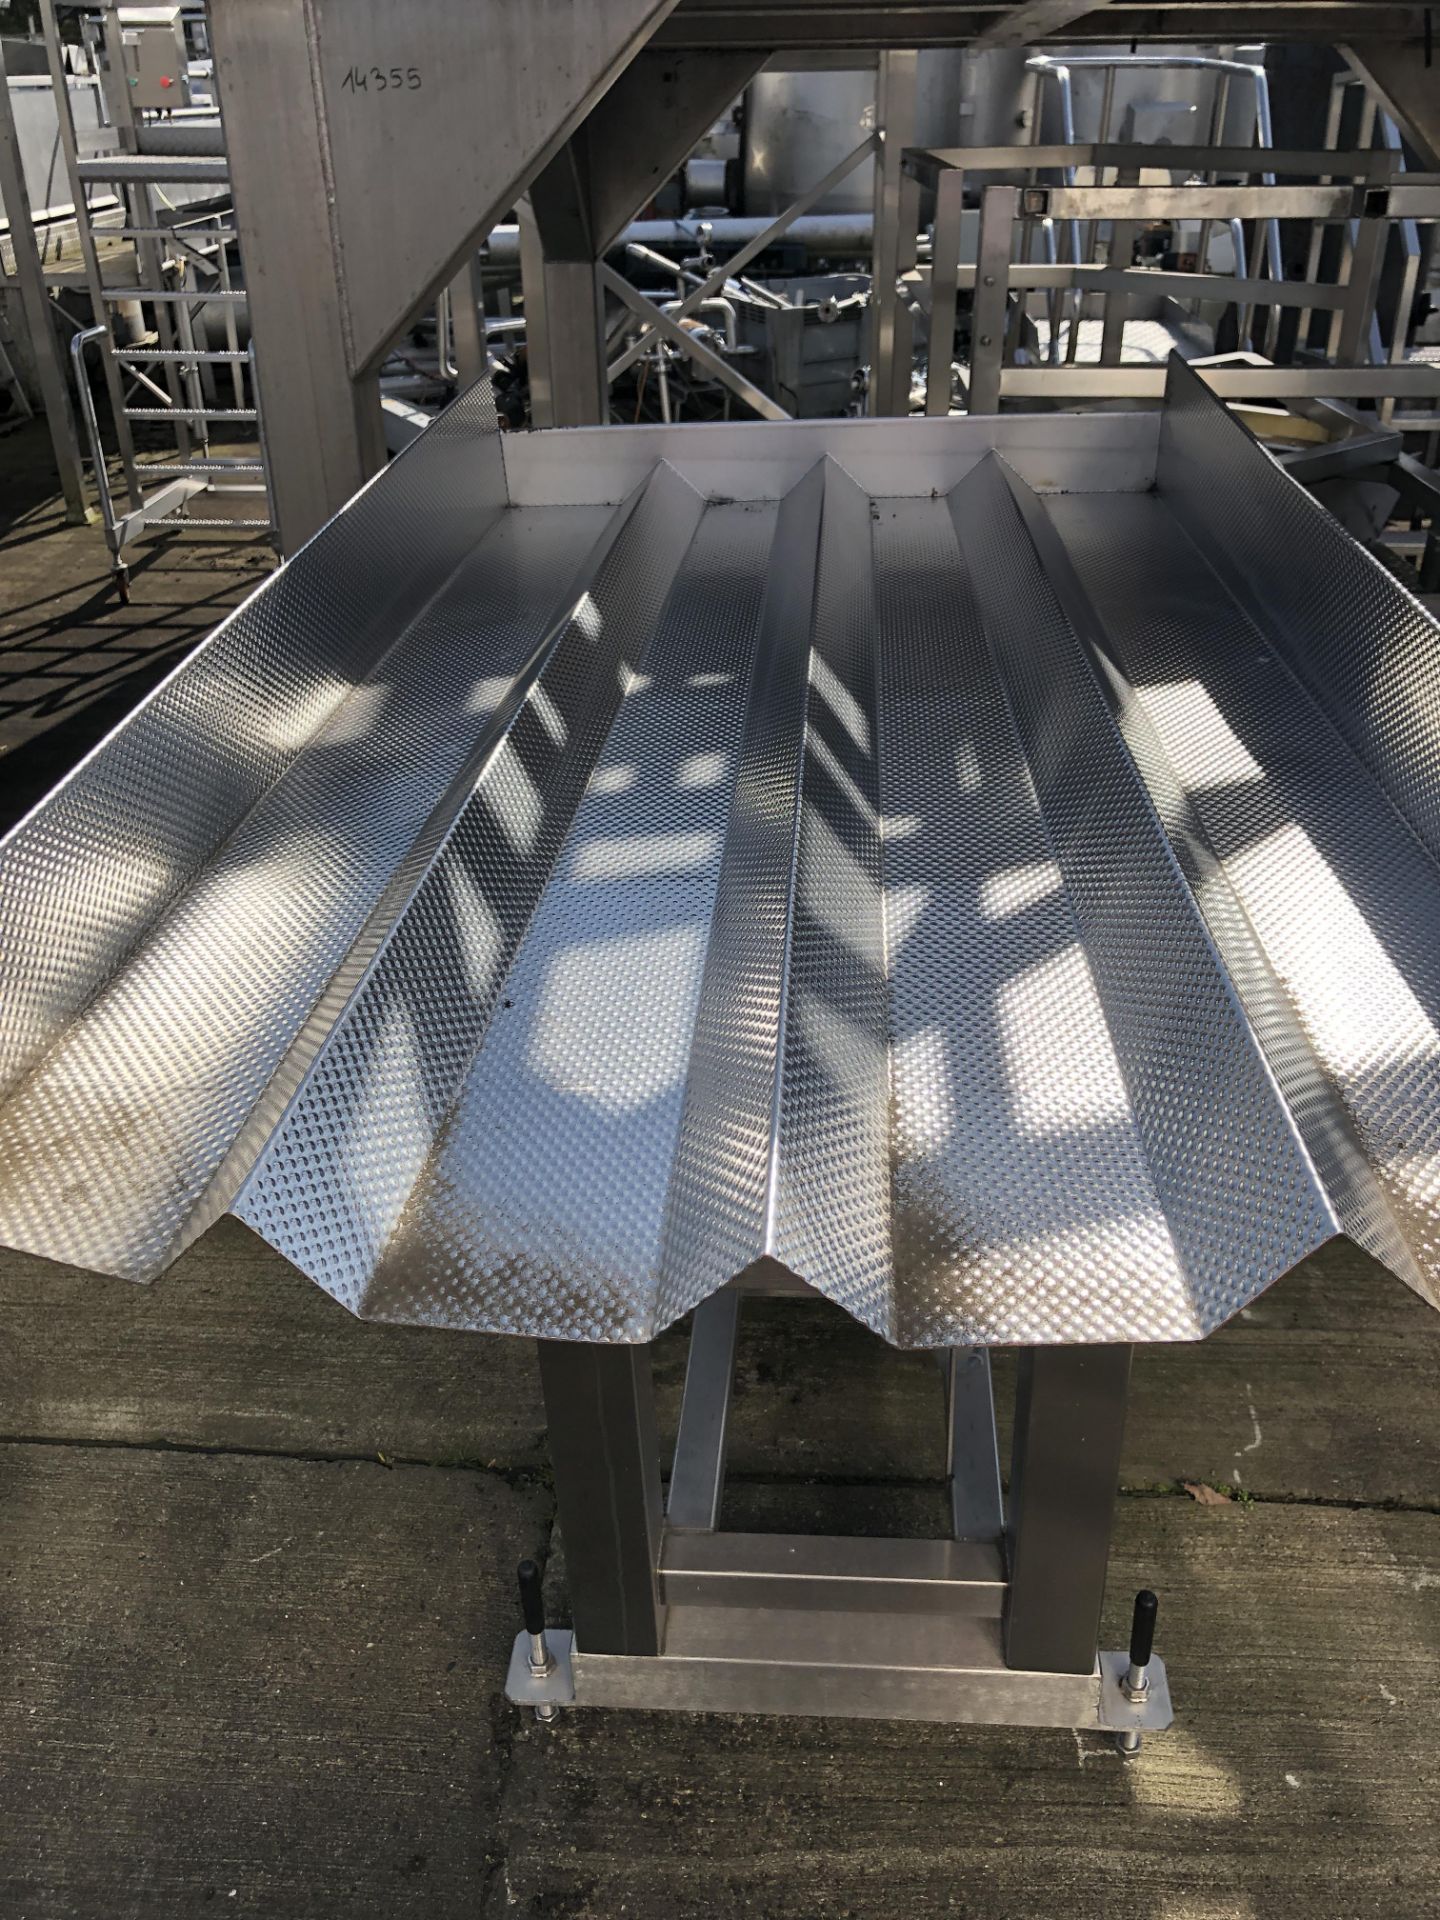 Stainless Steel Vibratory Feeder / Conveyor - Bild 2 aus 3